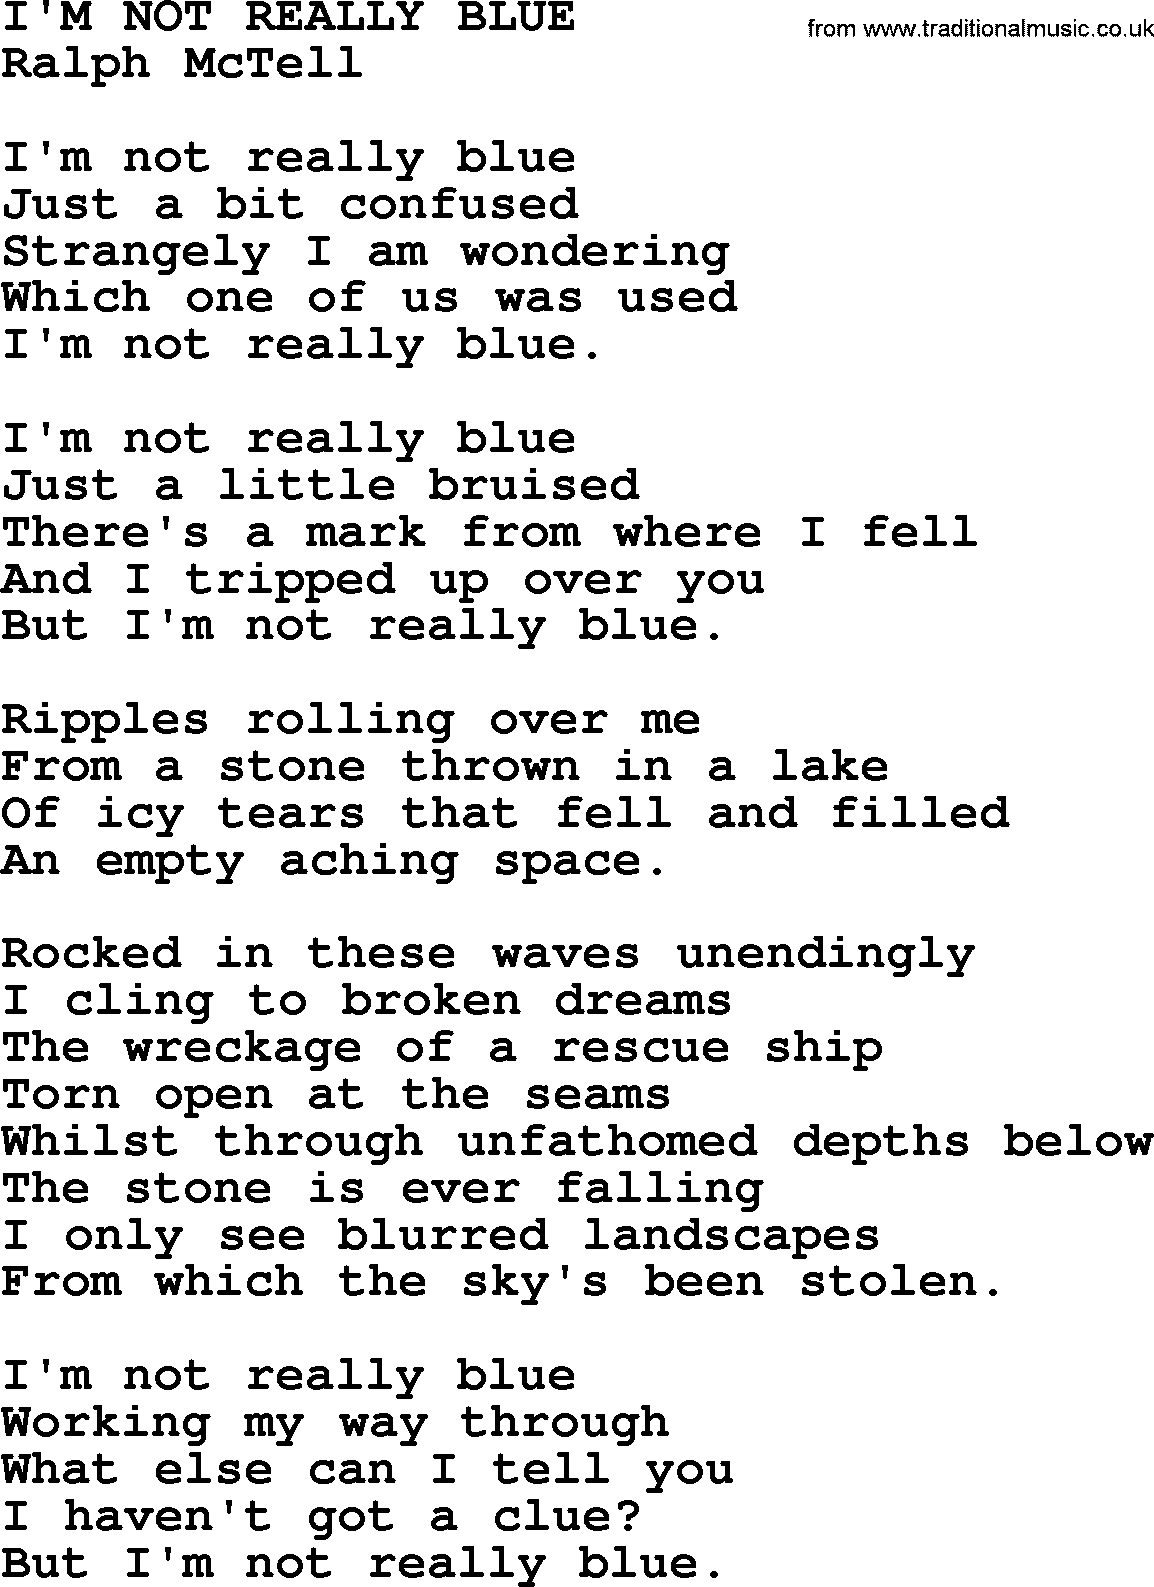 Ralph McTell Song: I'm Not Really Blue, lyrics